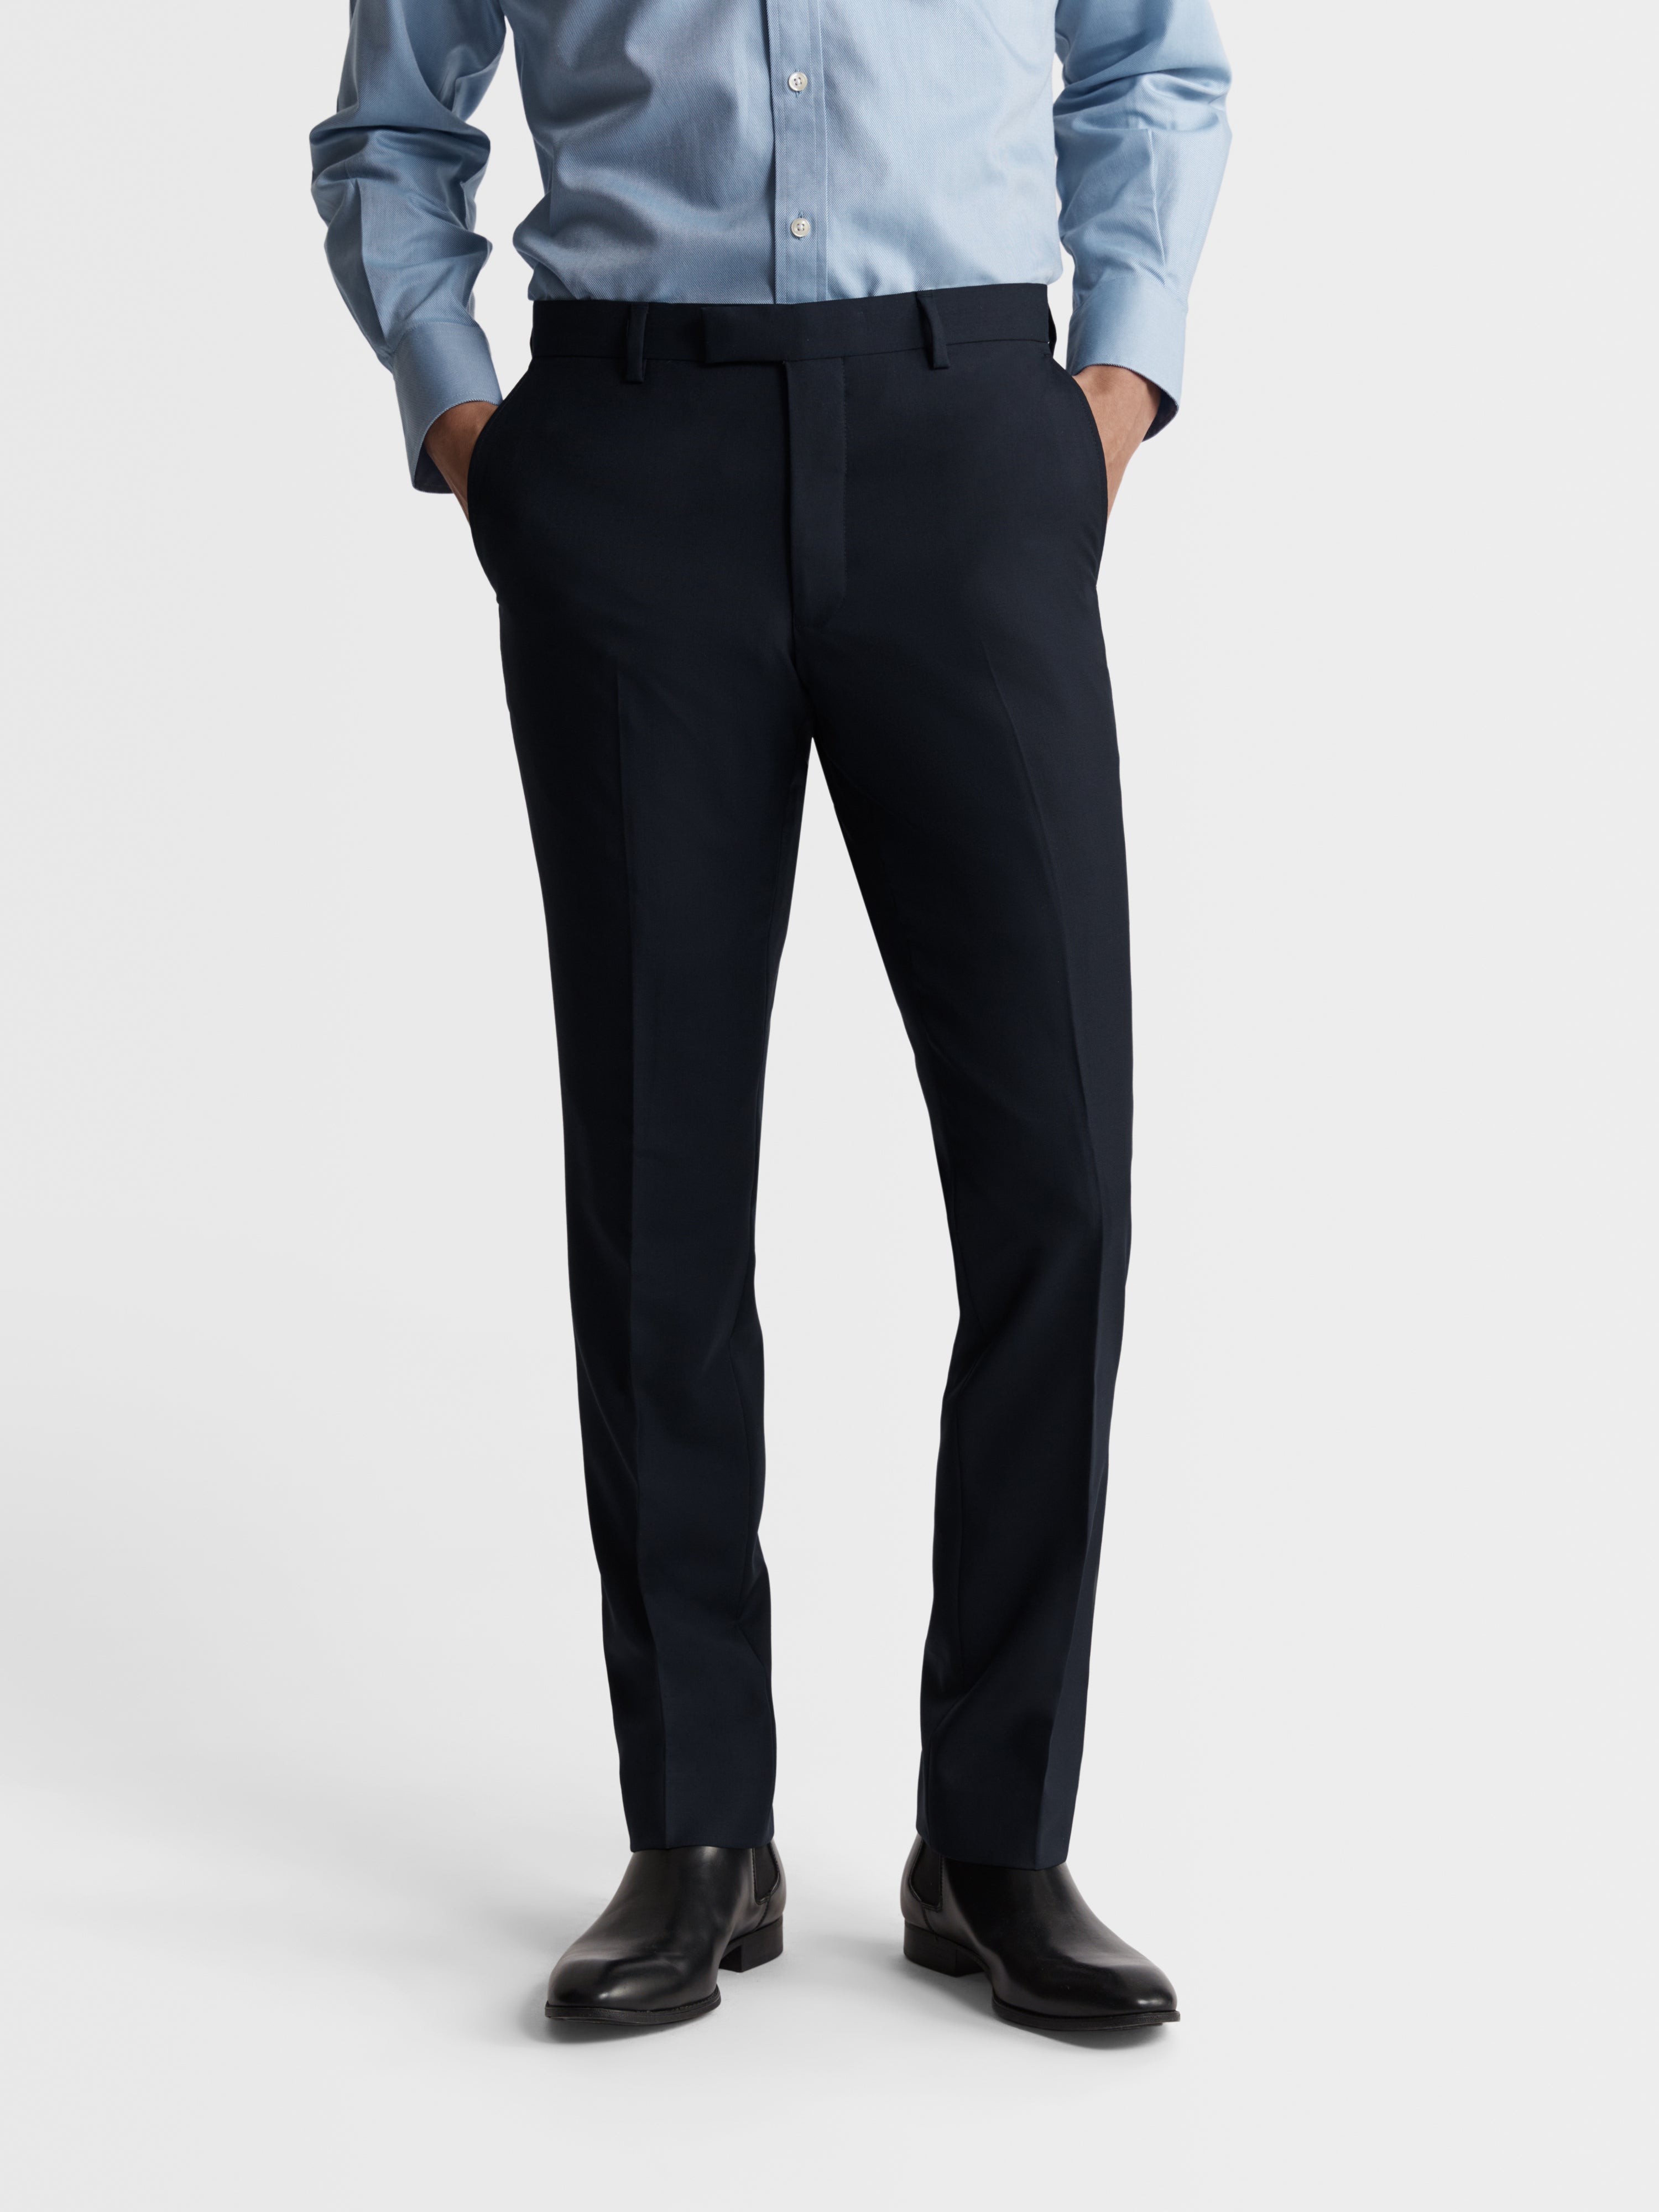 Charles Tyrwhitt Slim Fit Italian Luxury Textured Suit Trousers, Indigo, 38L